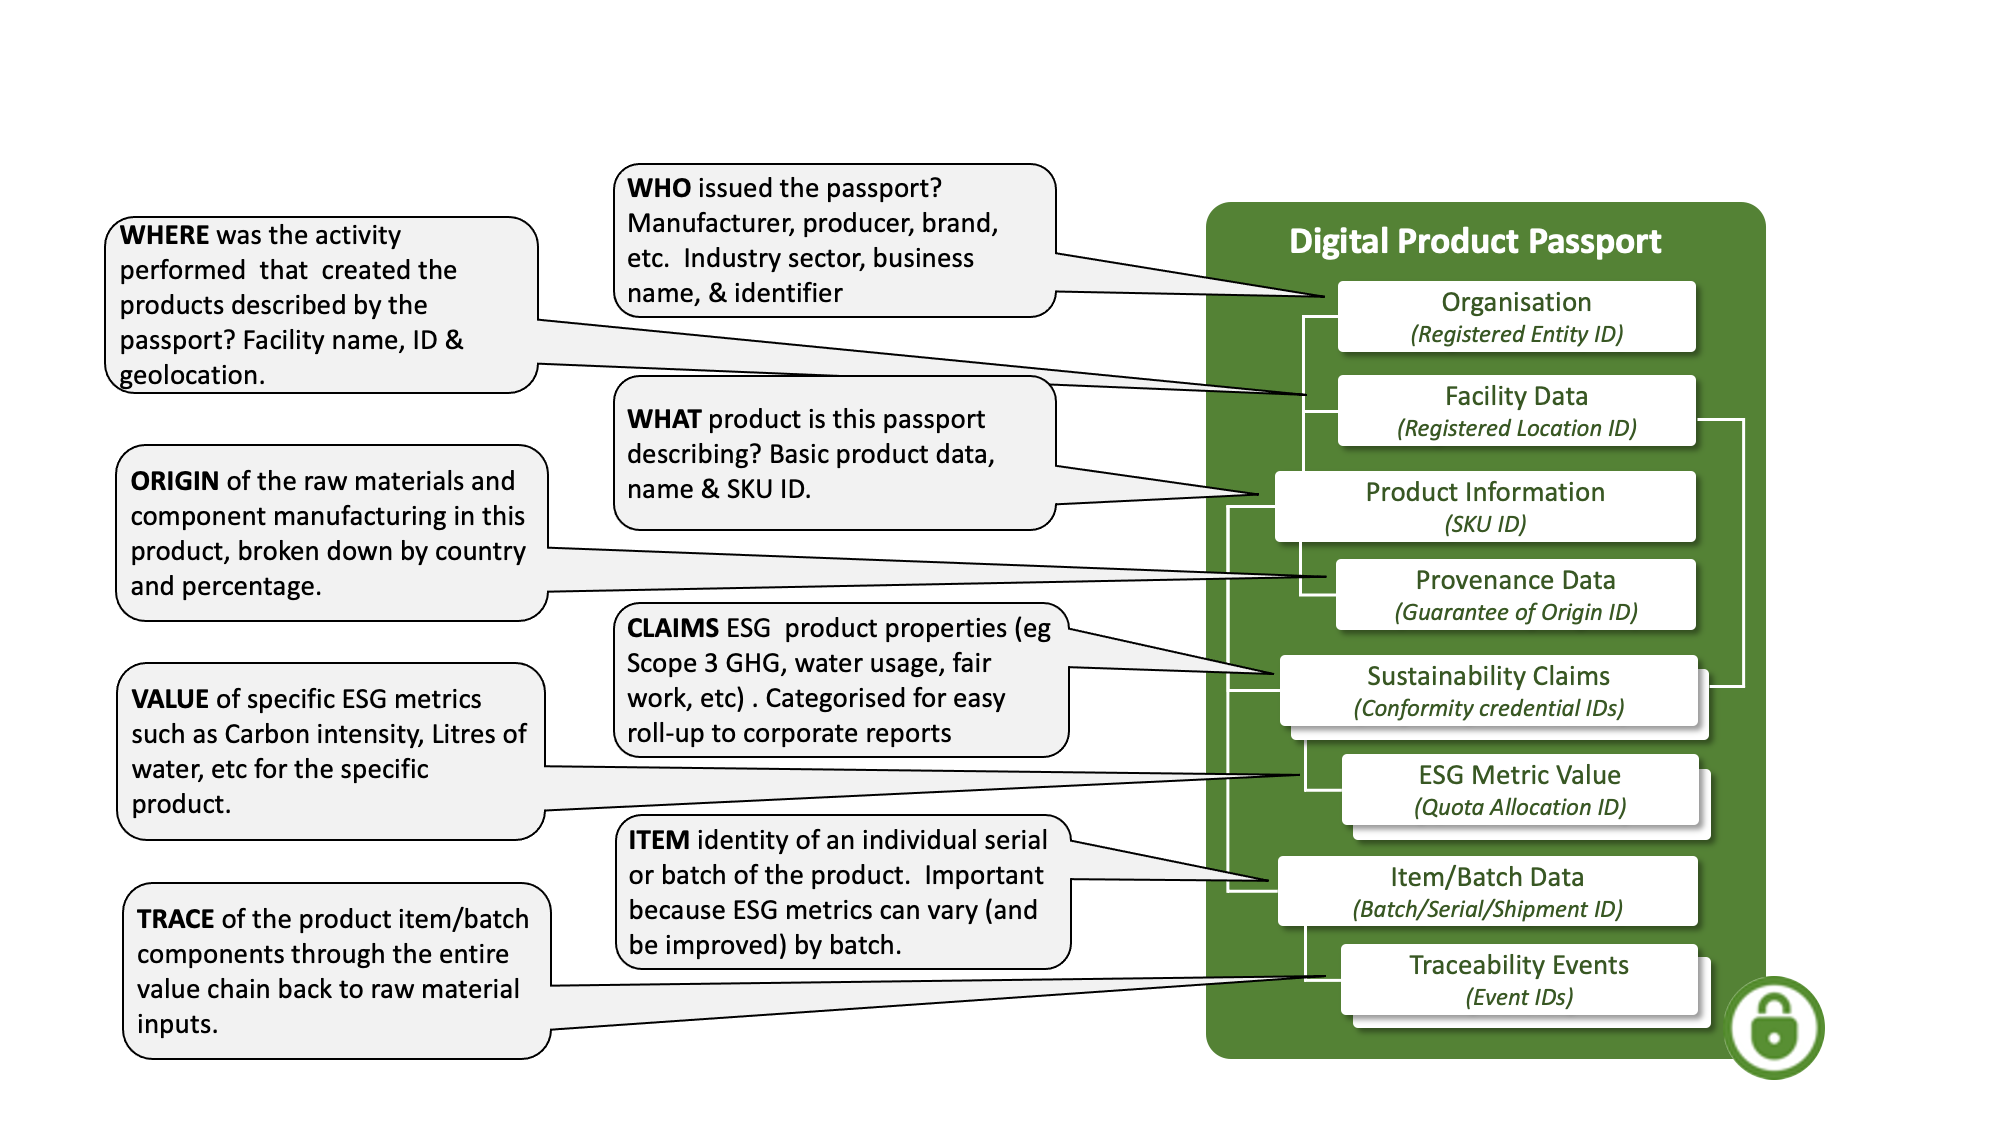 Digital Product passport conceptual model